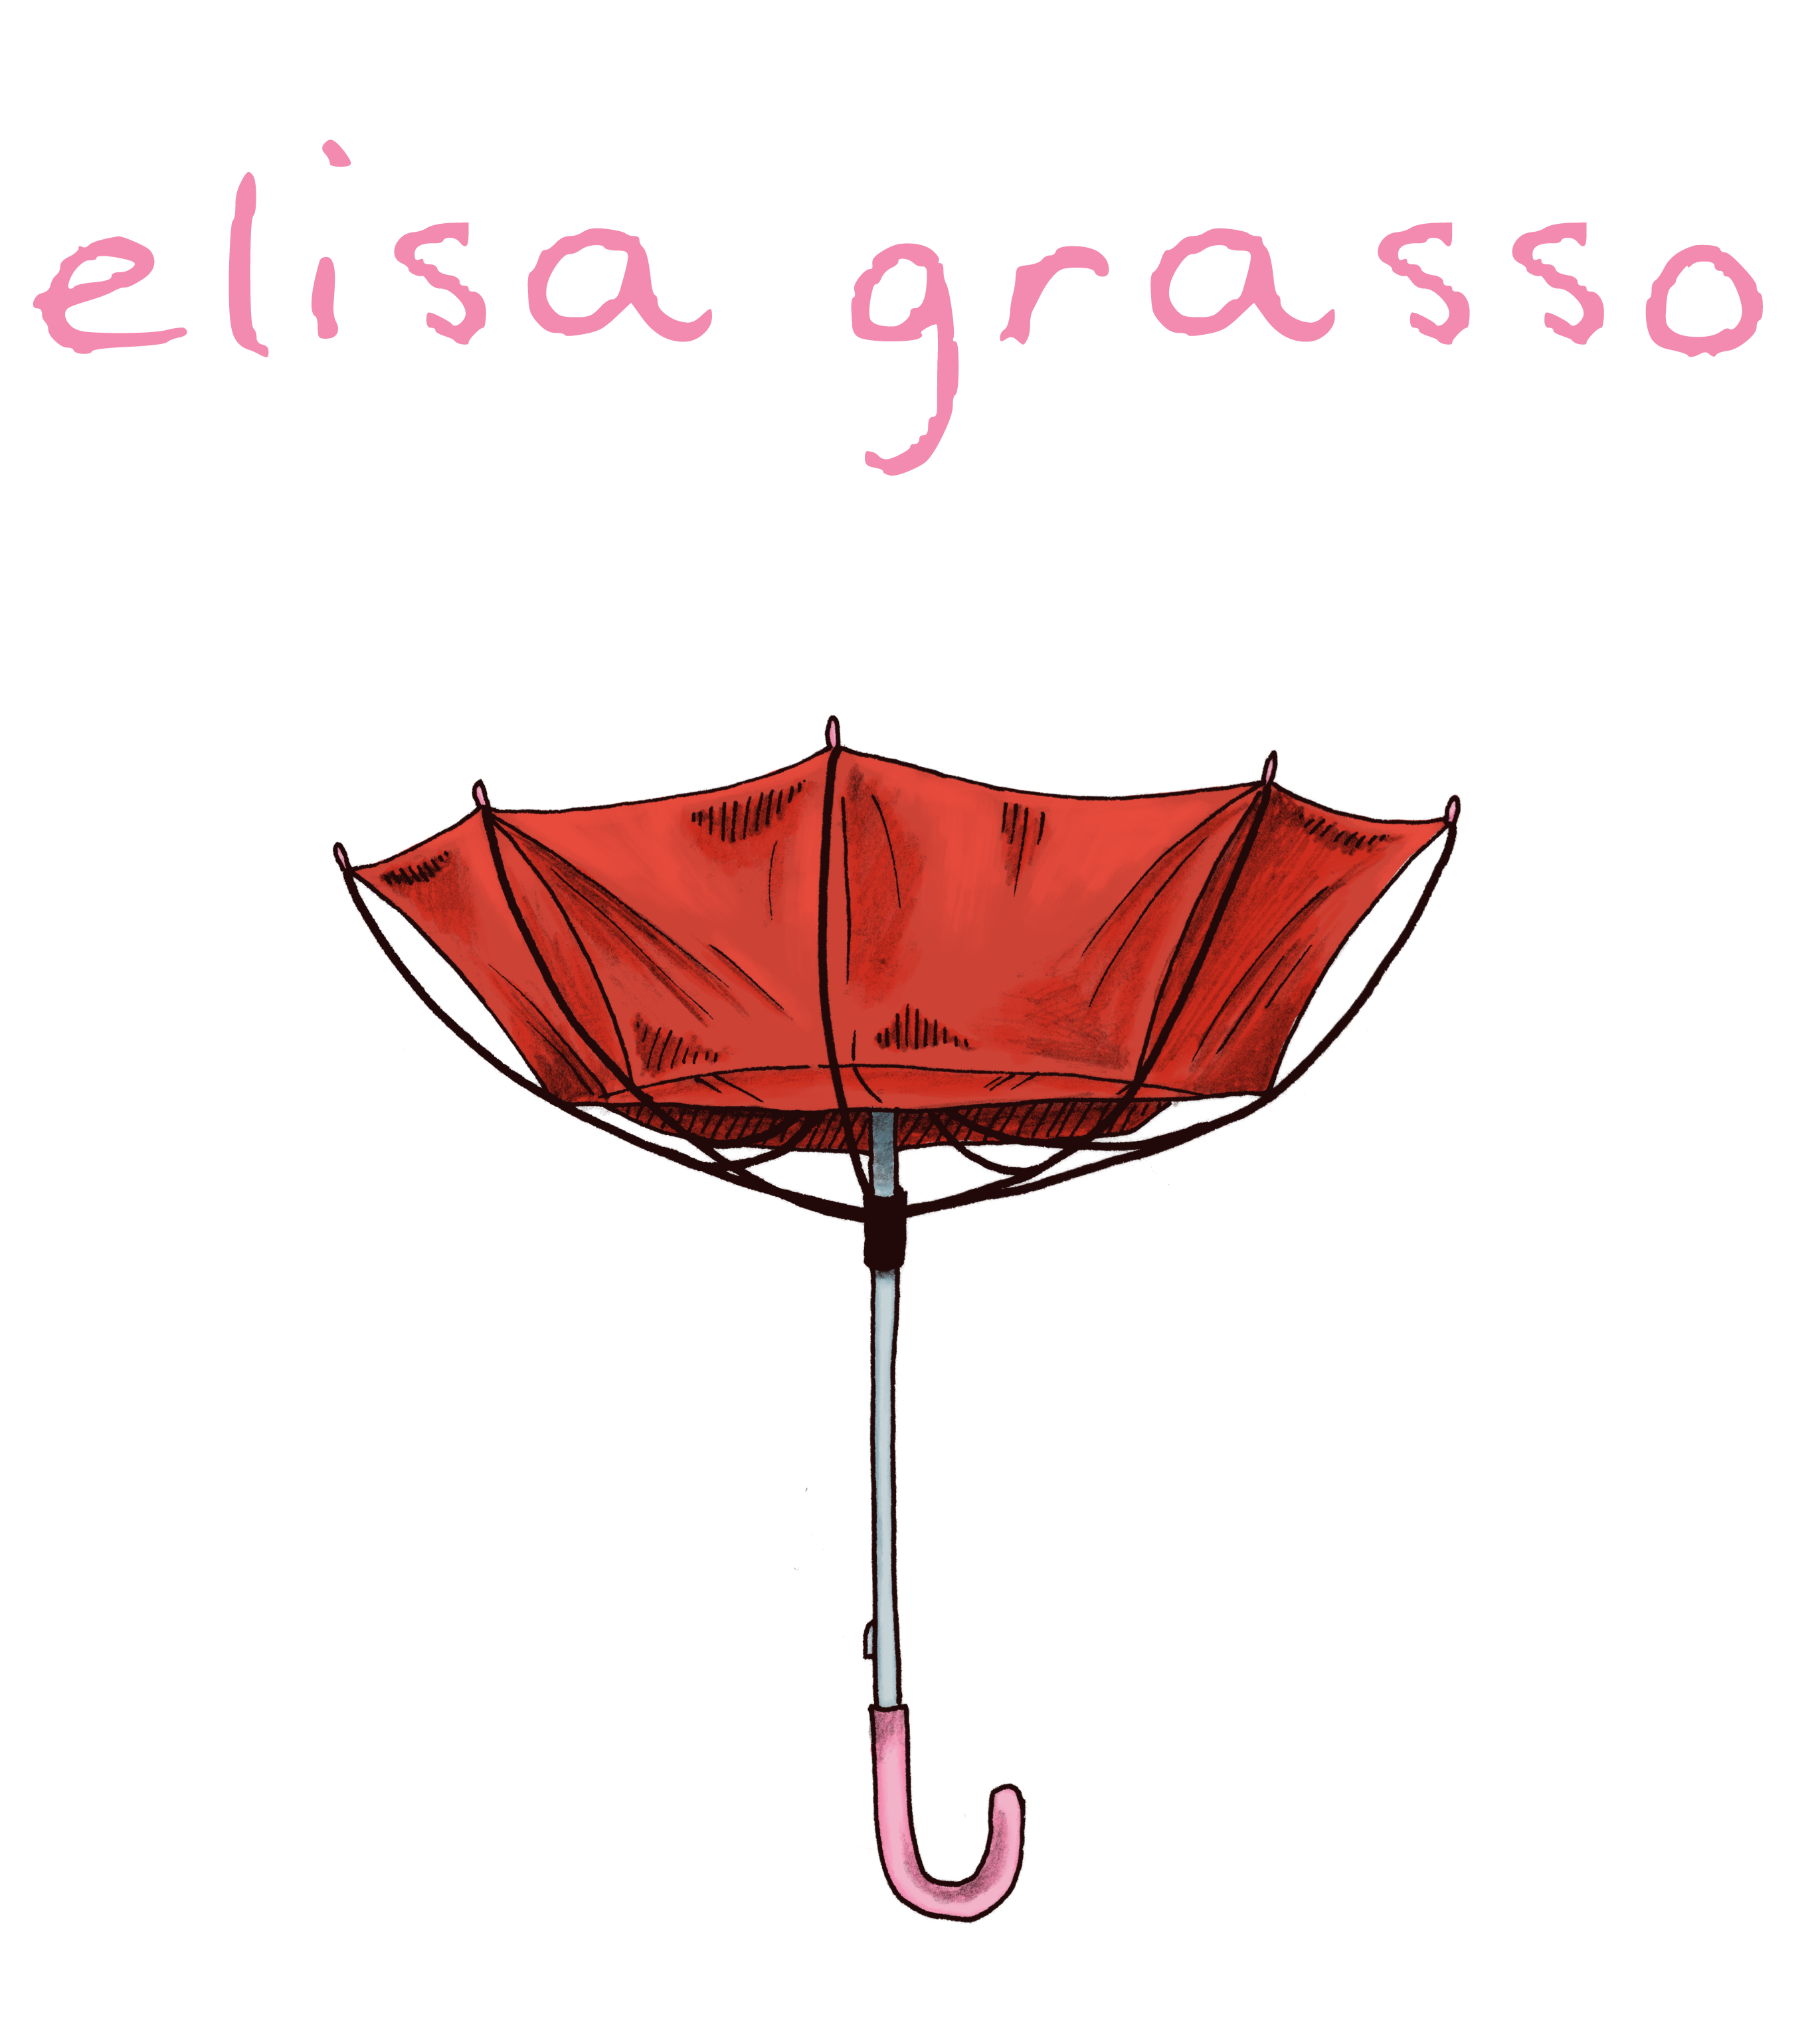 Elisa Grasso